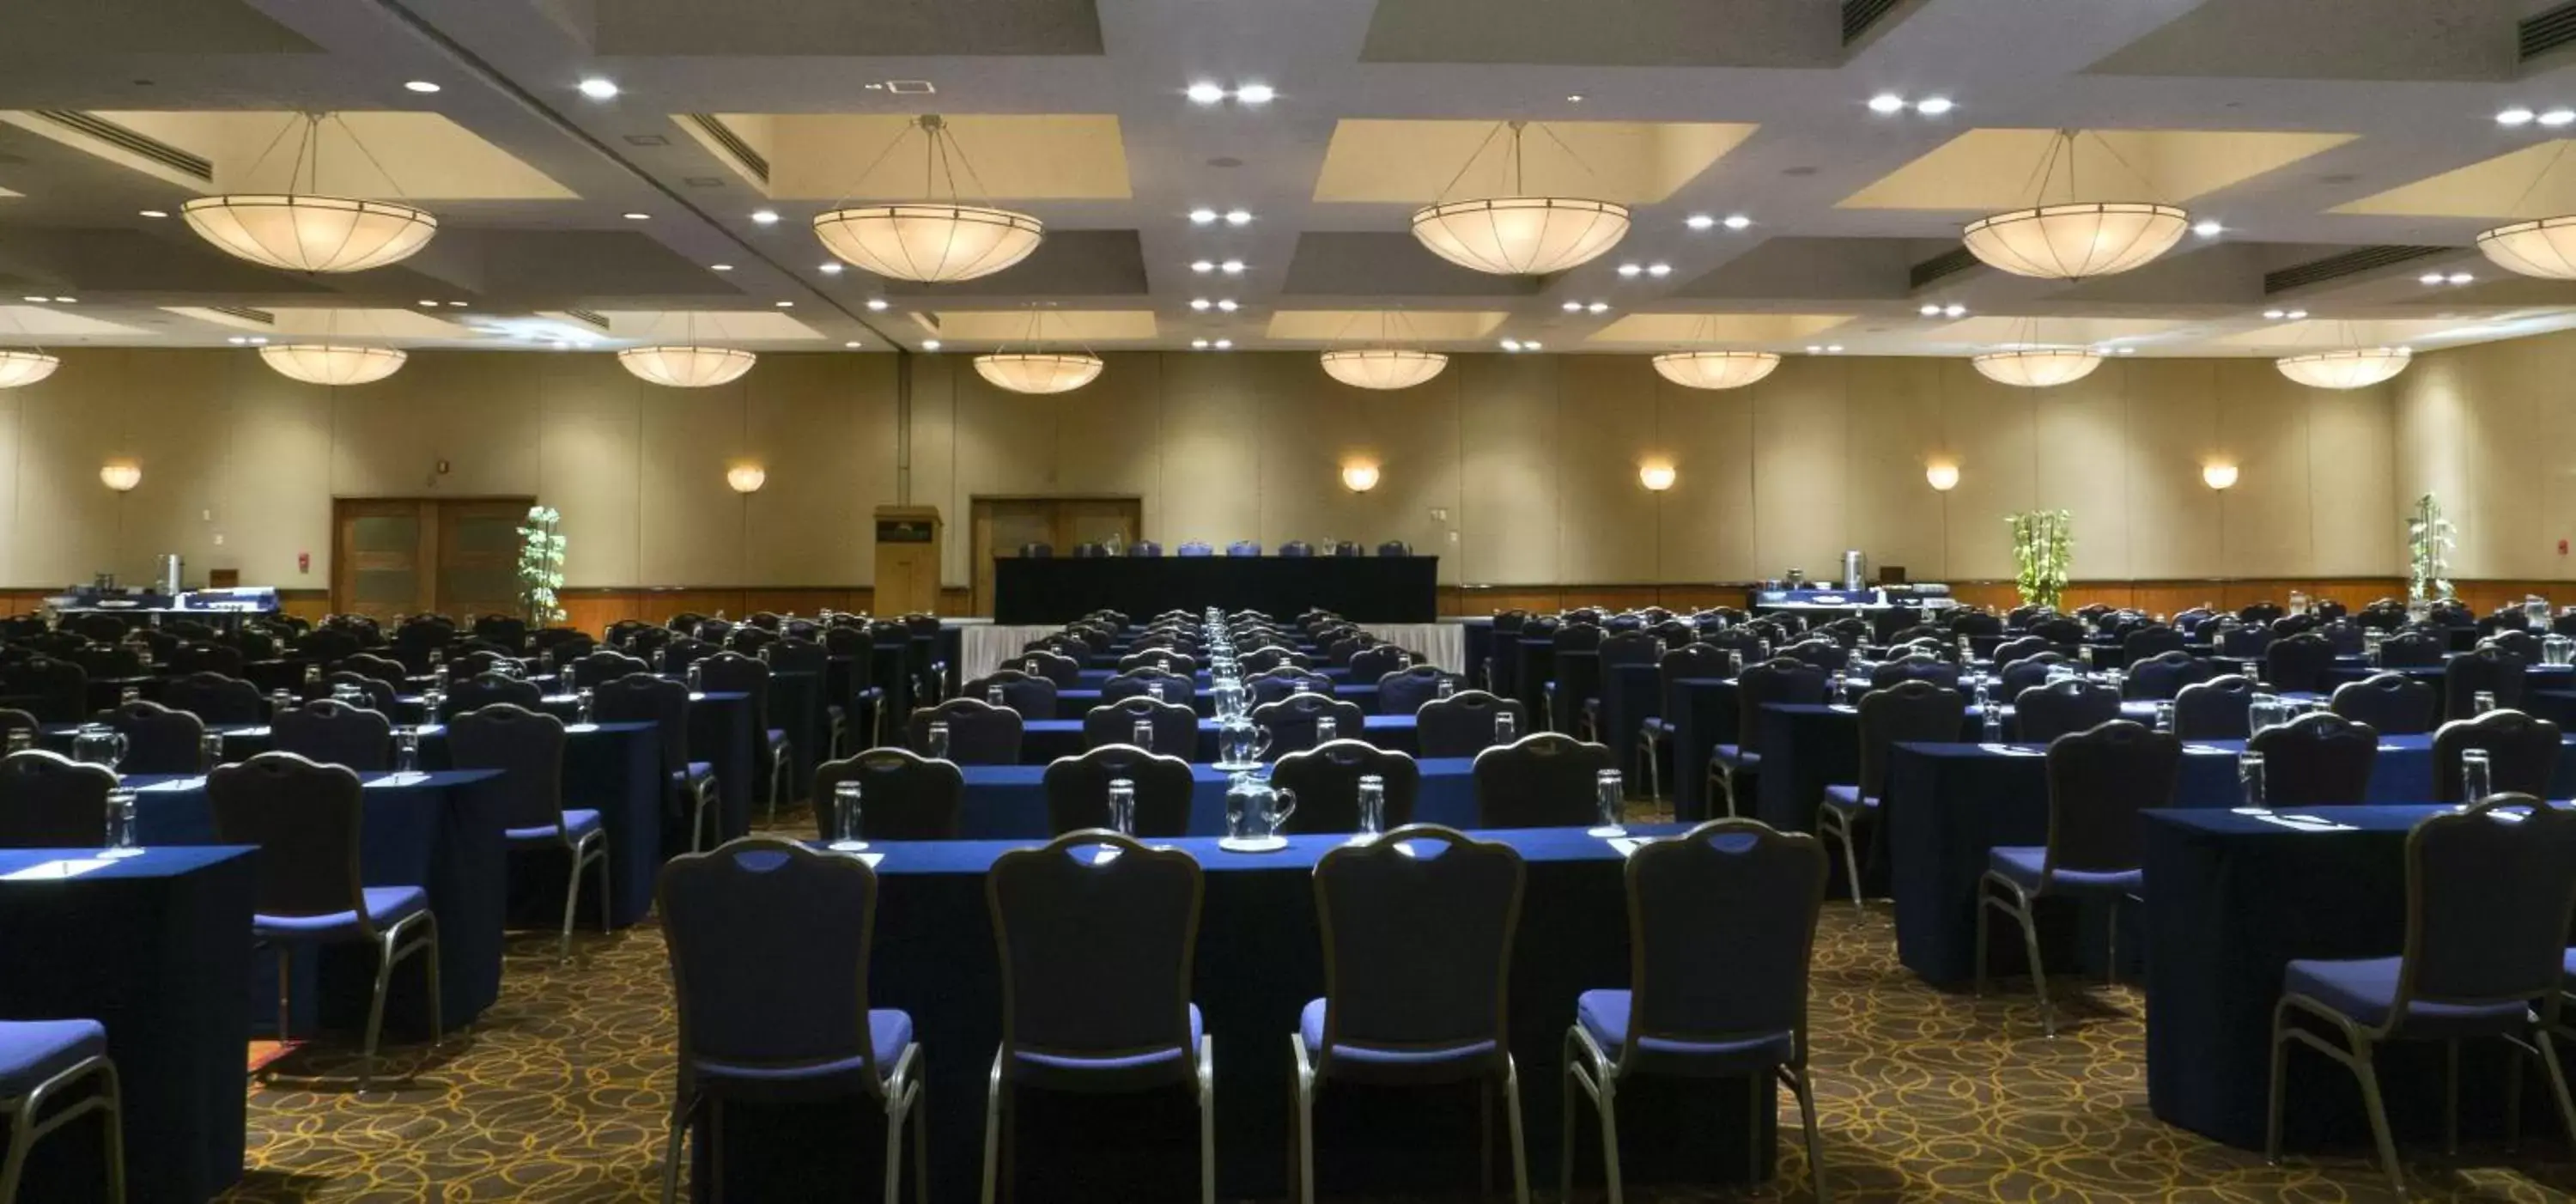 Meeting/conference room, Banquet Facilities in Fiesta Americana Reforma